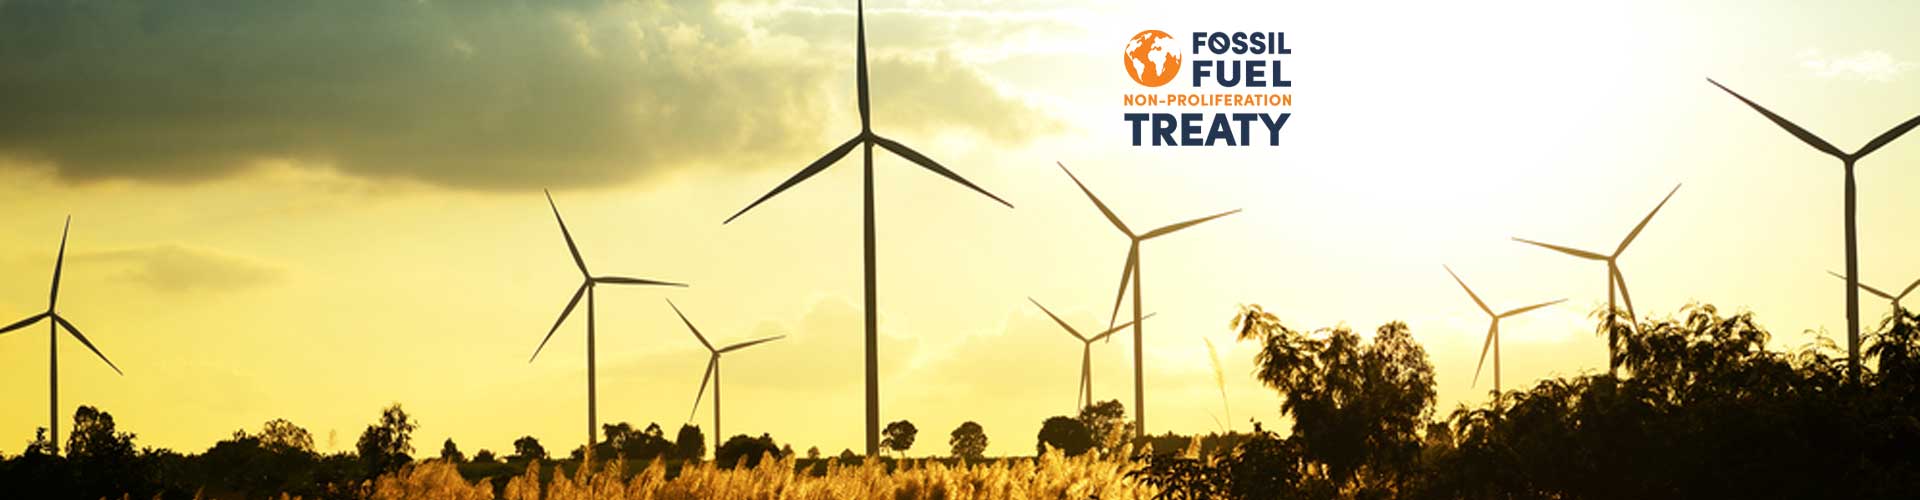 Renewable energy turbines overlaid with the Fossil Fuel Non-Proliferation Treaty logo